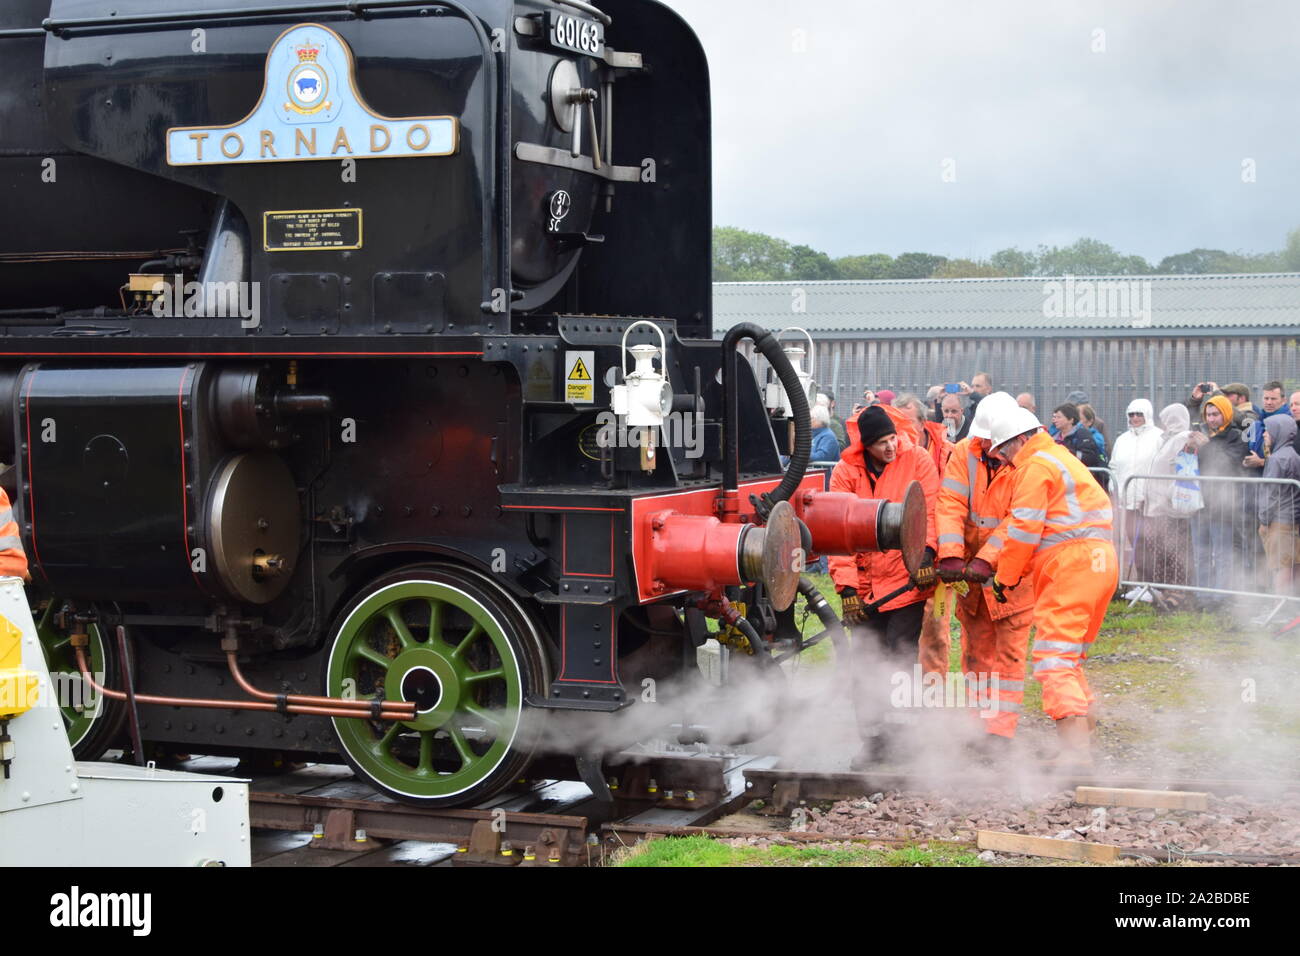 Volunteers turning Tornado steam engine on turntable at Ferryhill Railway Heritage Trust Aberdeen Stock Photo